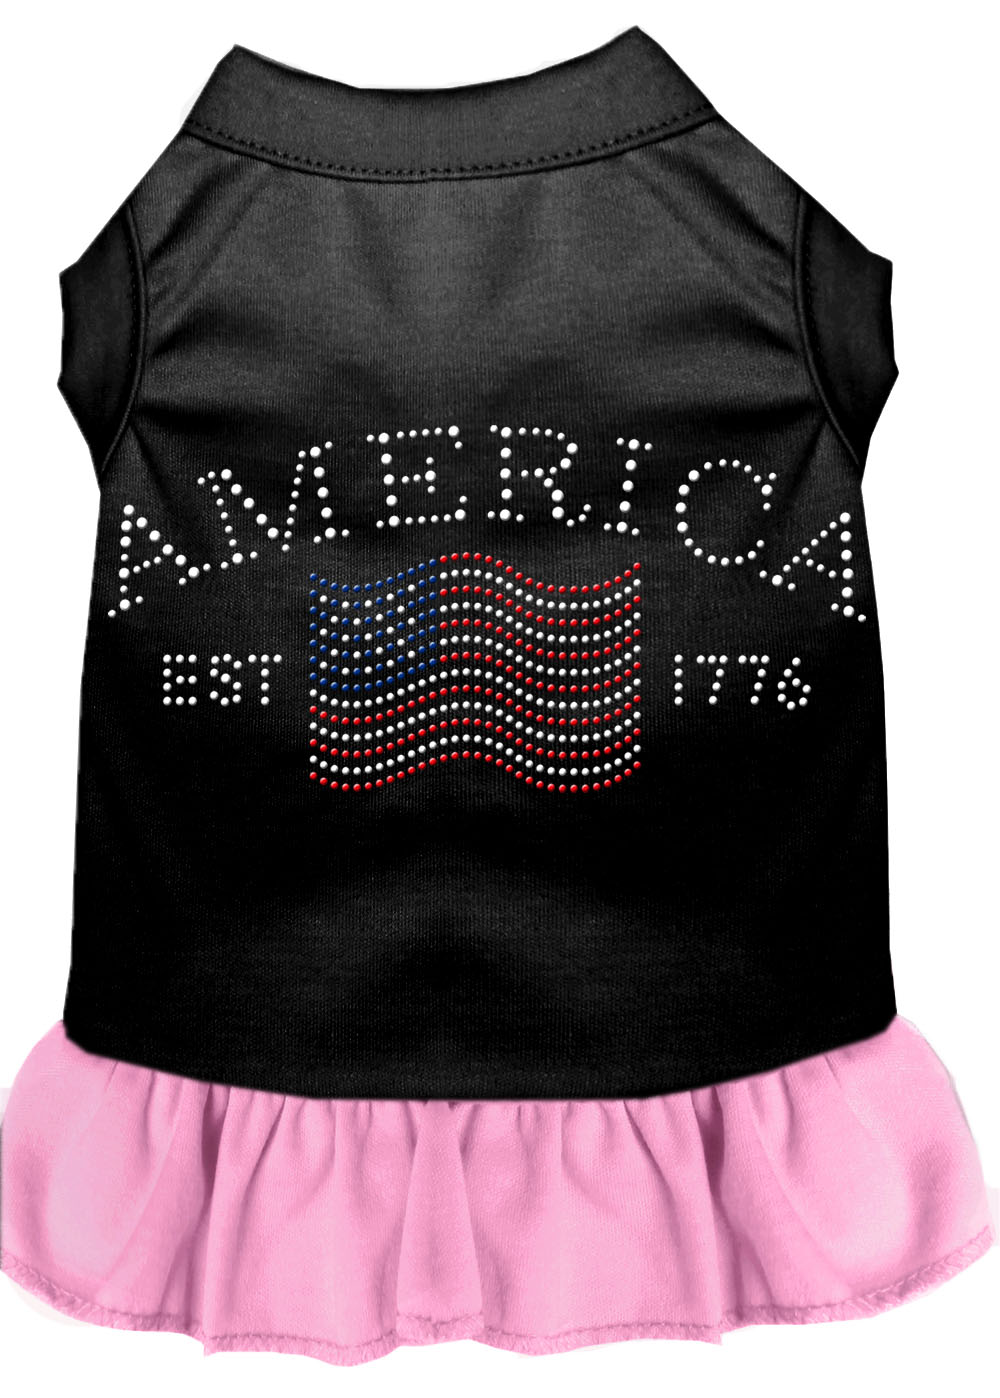 Classic America Rhinestone Dress Black with Light Pink Lg